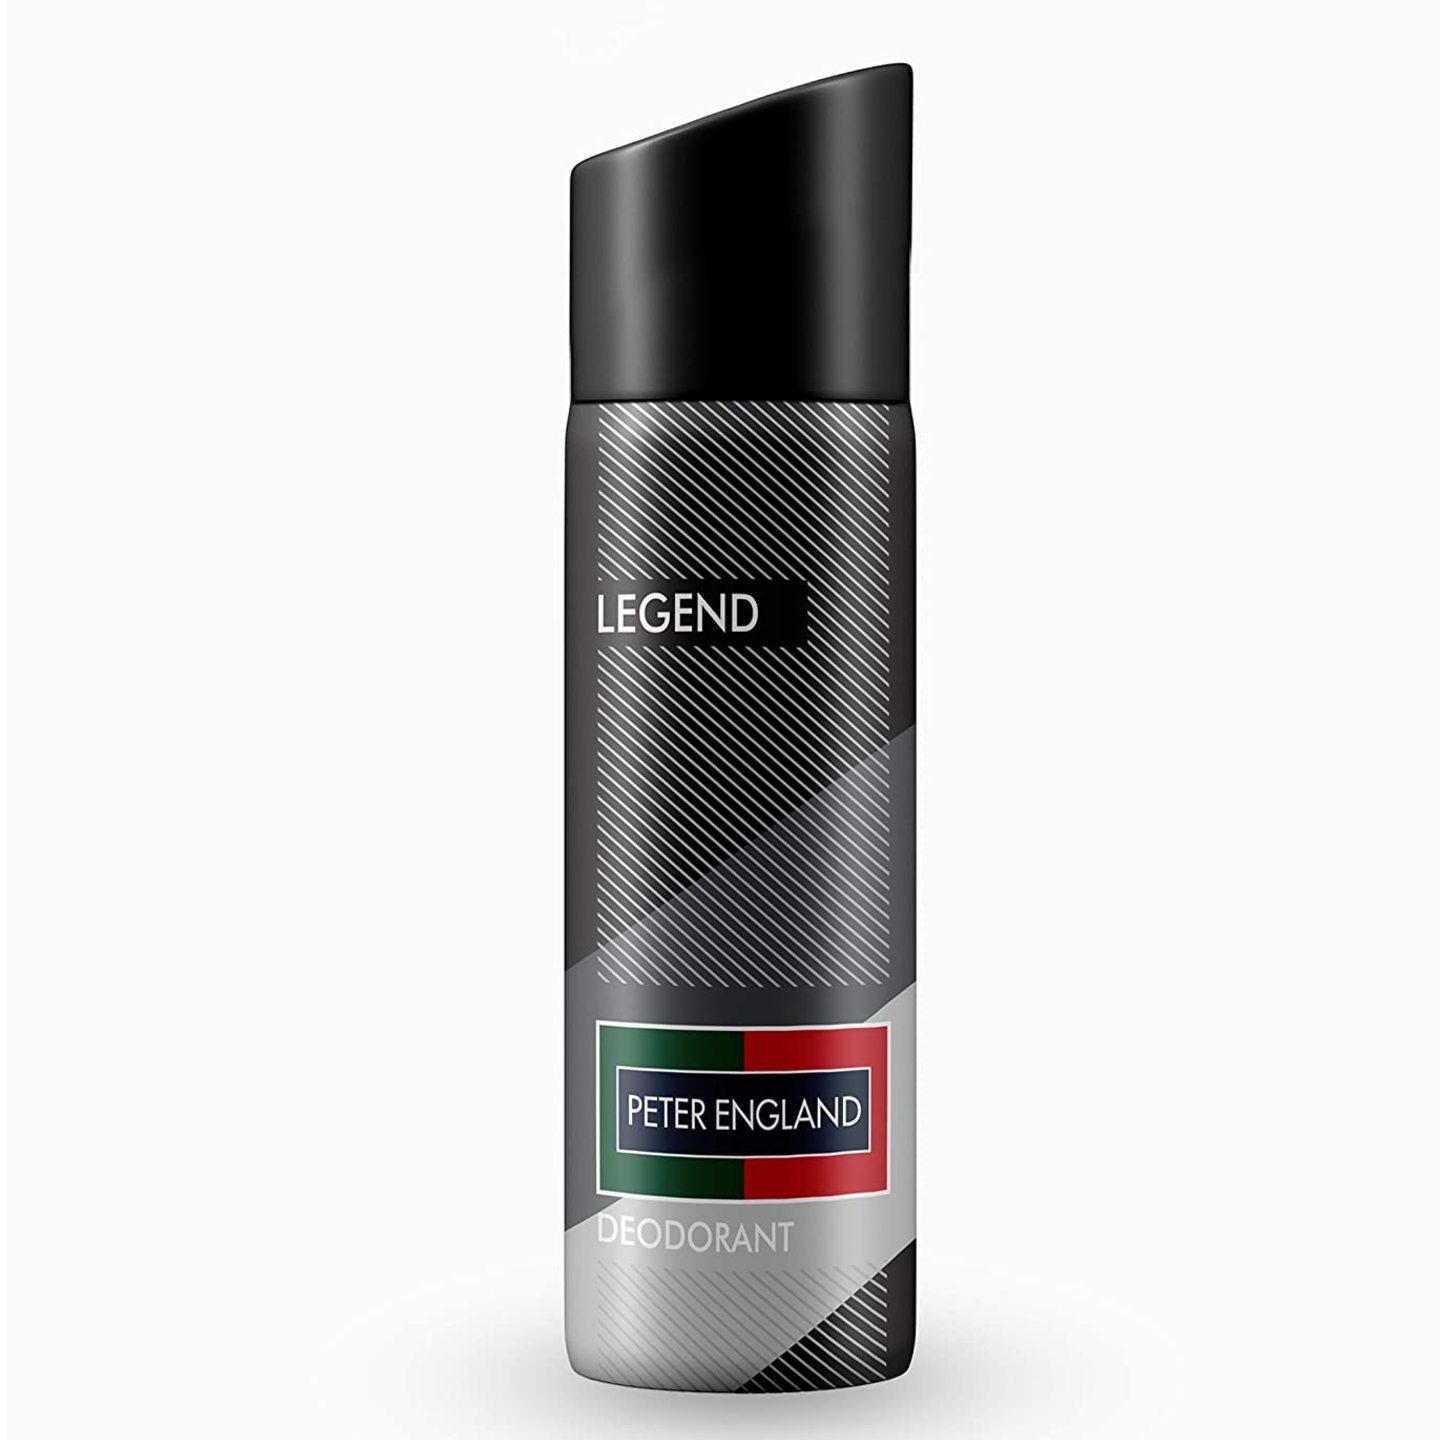 Peter England Legend Deodorant, 150 ml